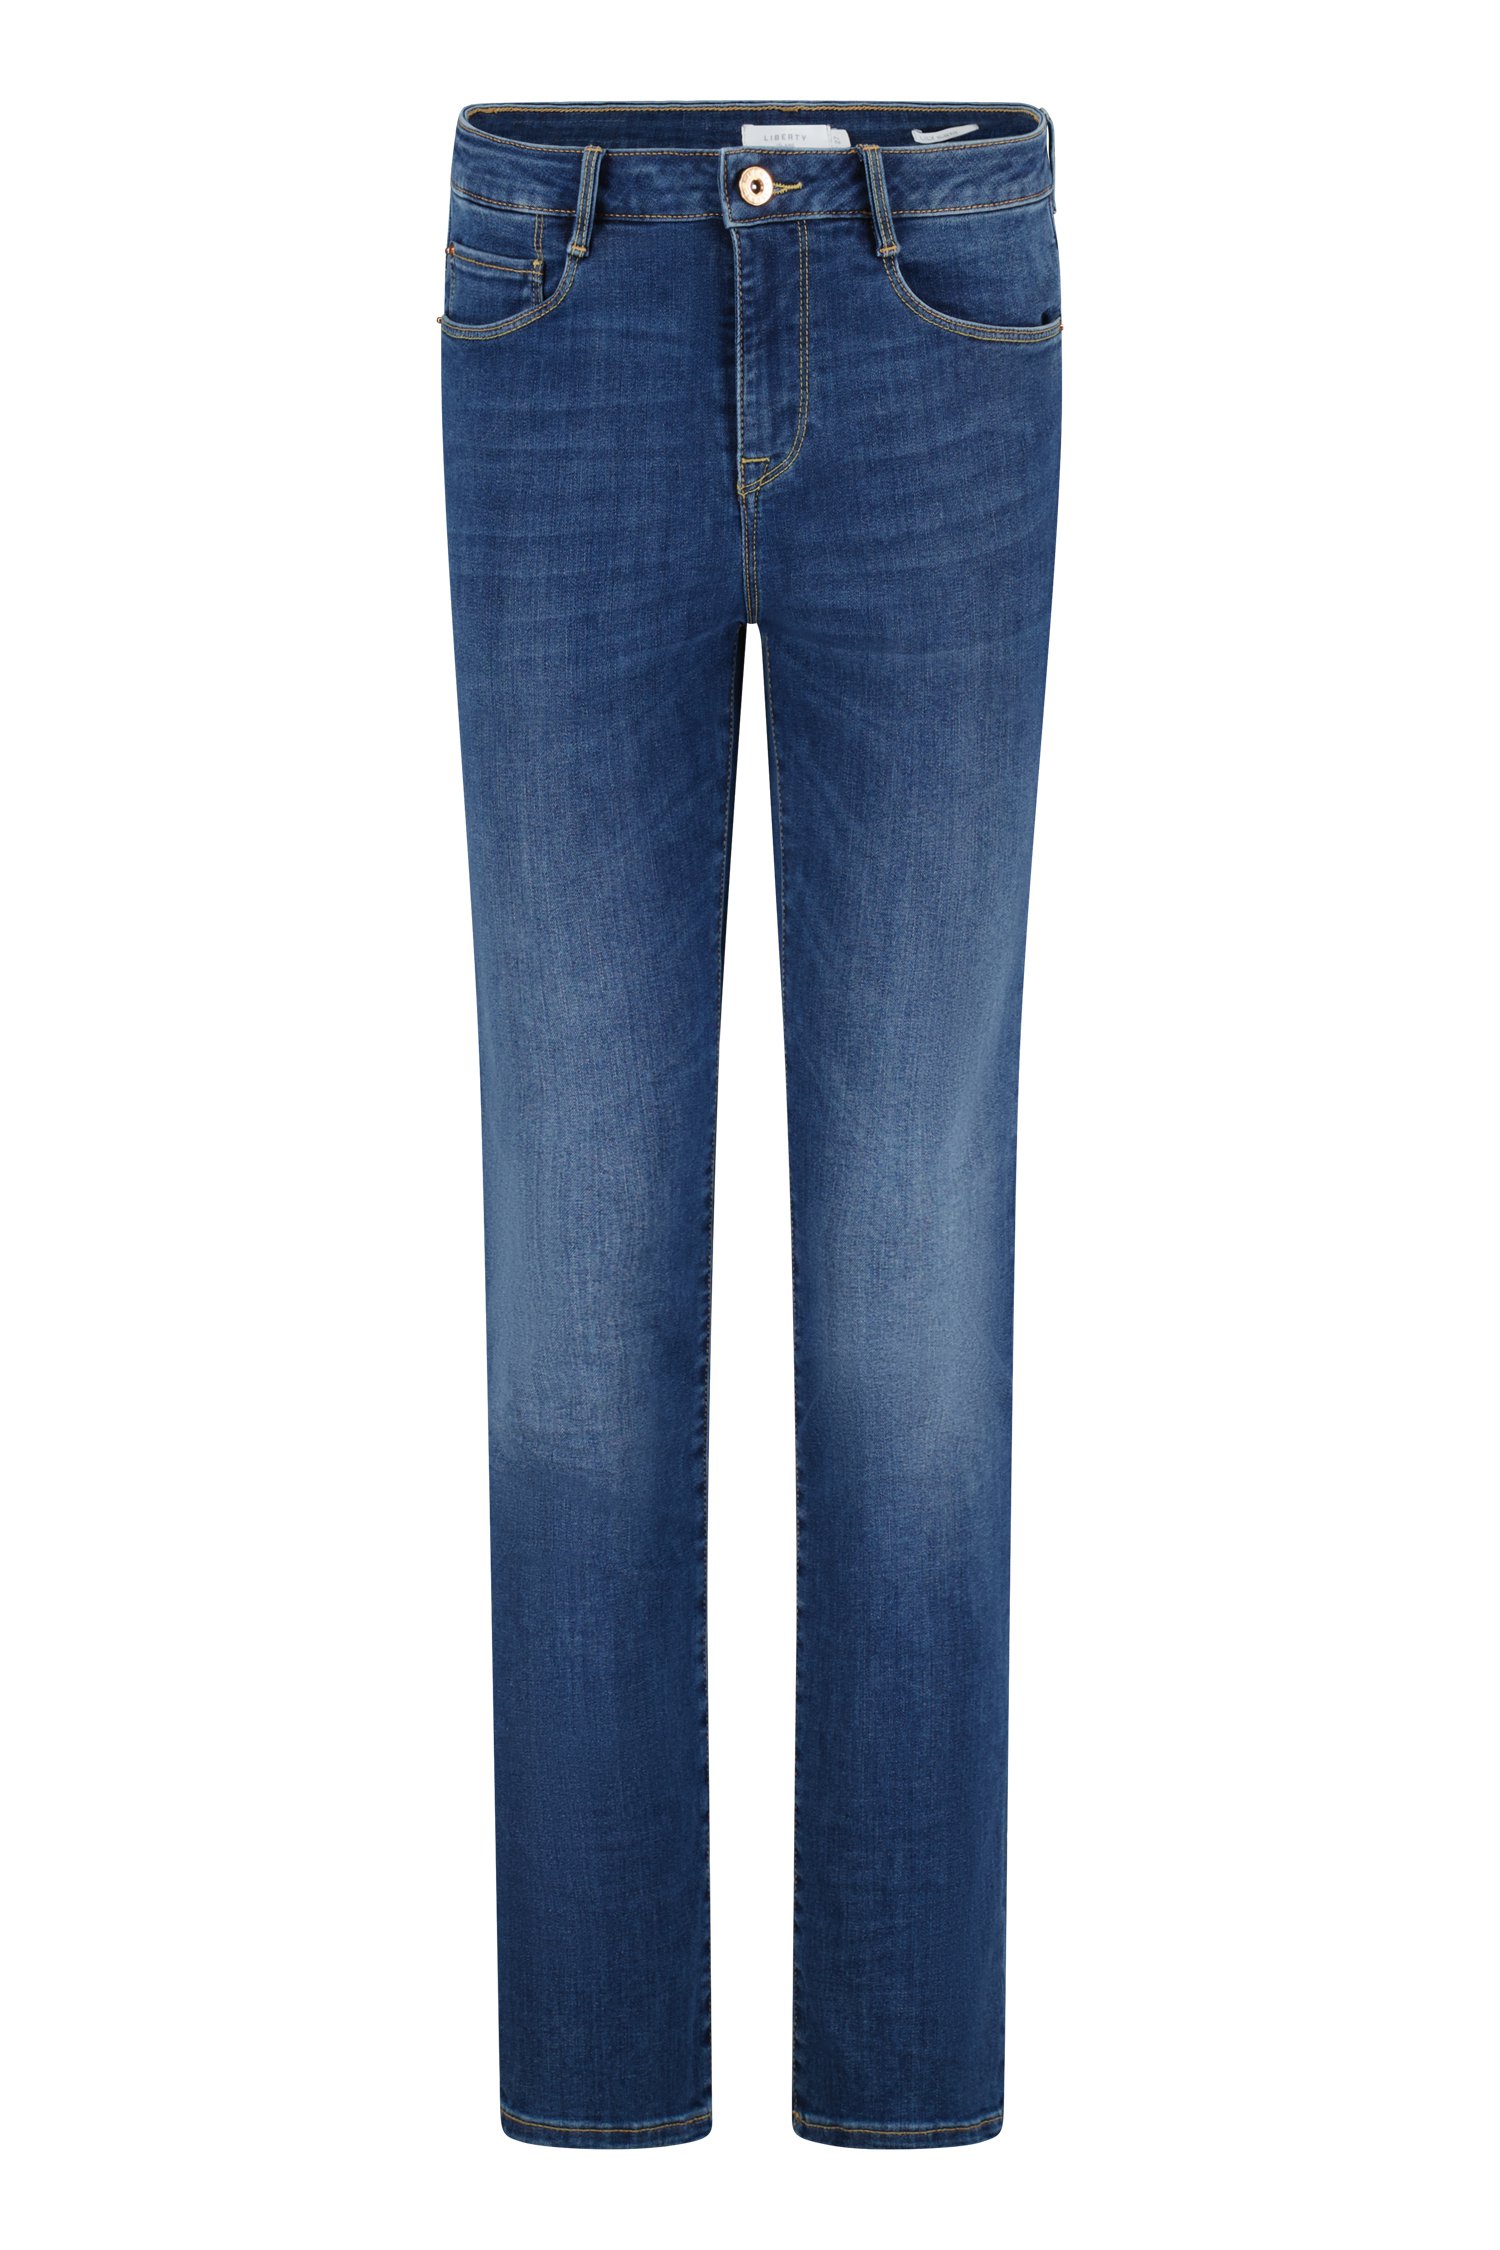 Medium blauwe jeans - Lily - slim fit - L32 van Liberty Island Denim voor Dames